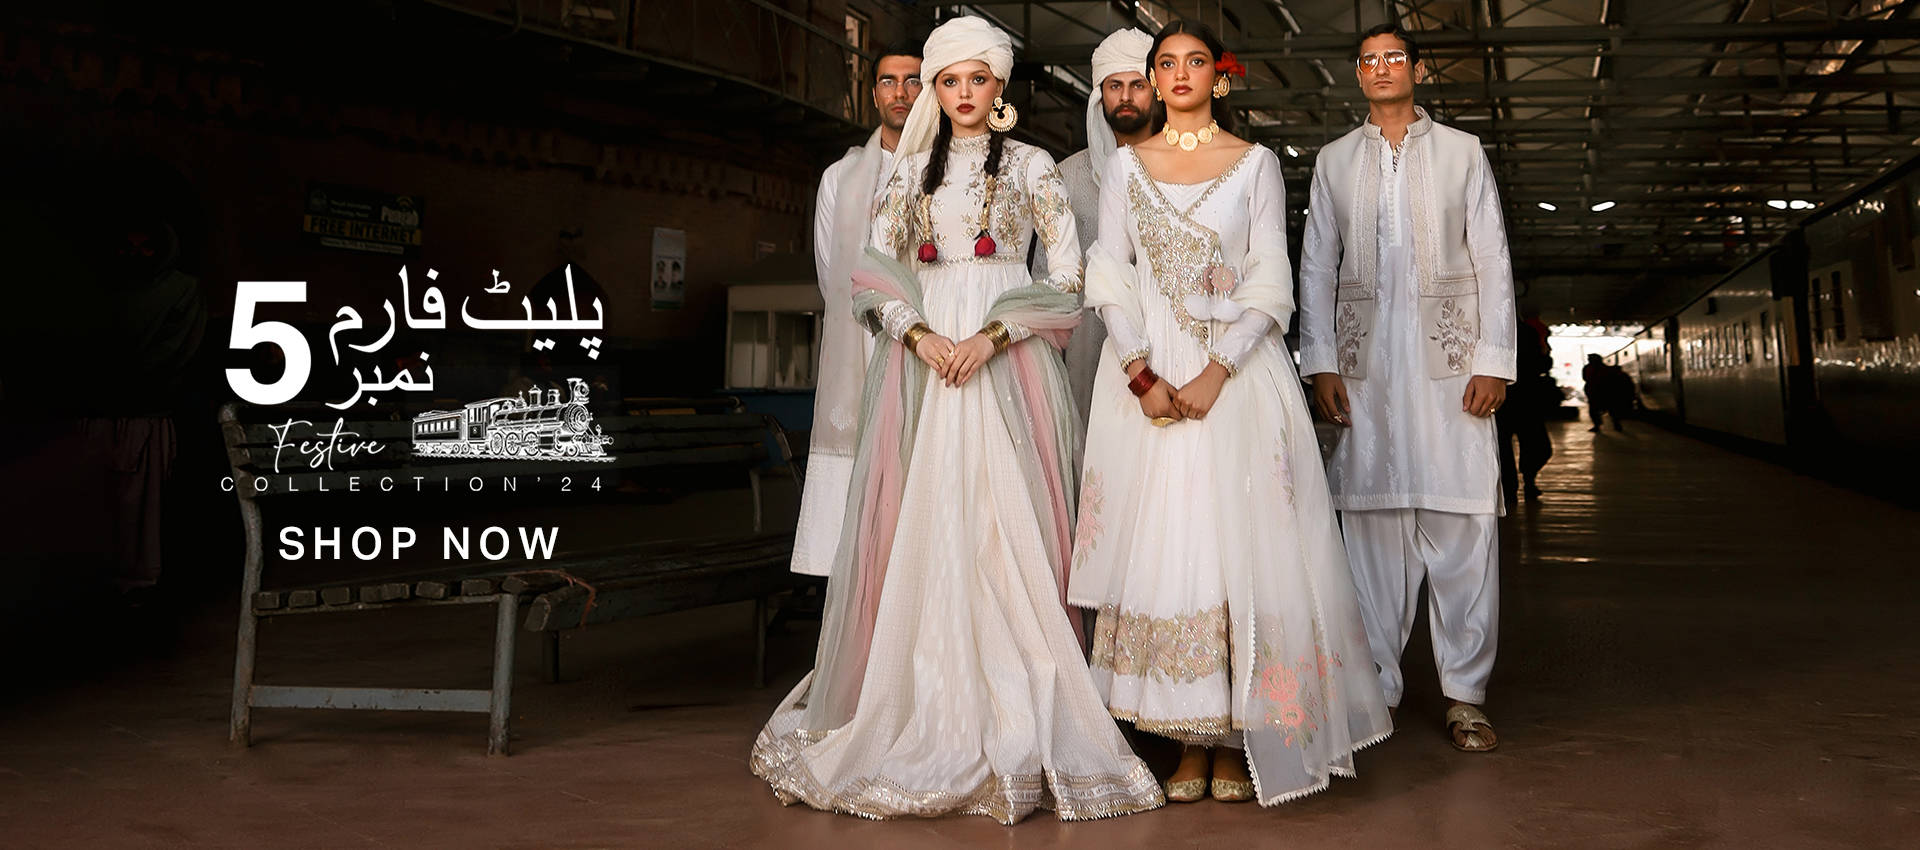 Punjabi Wedding Lehenga For Bride | ☞ Maharani Designer Boutique